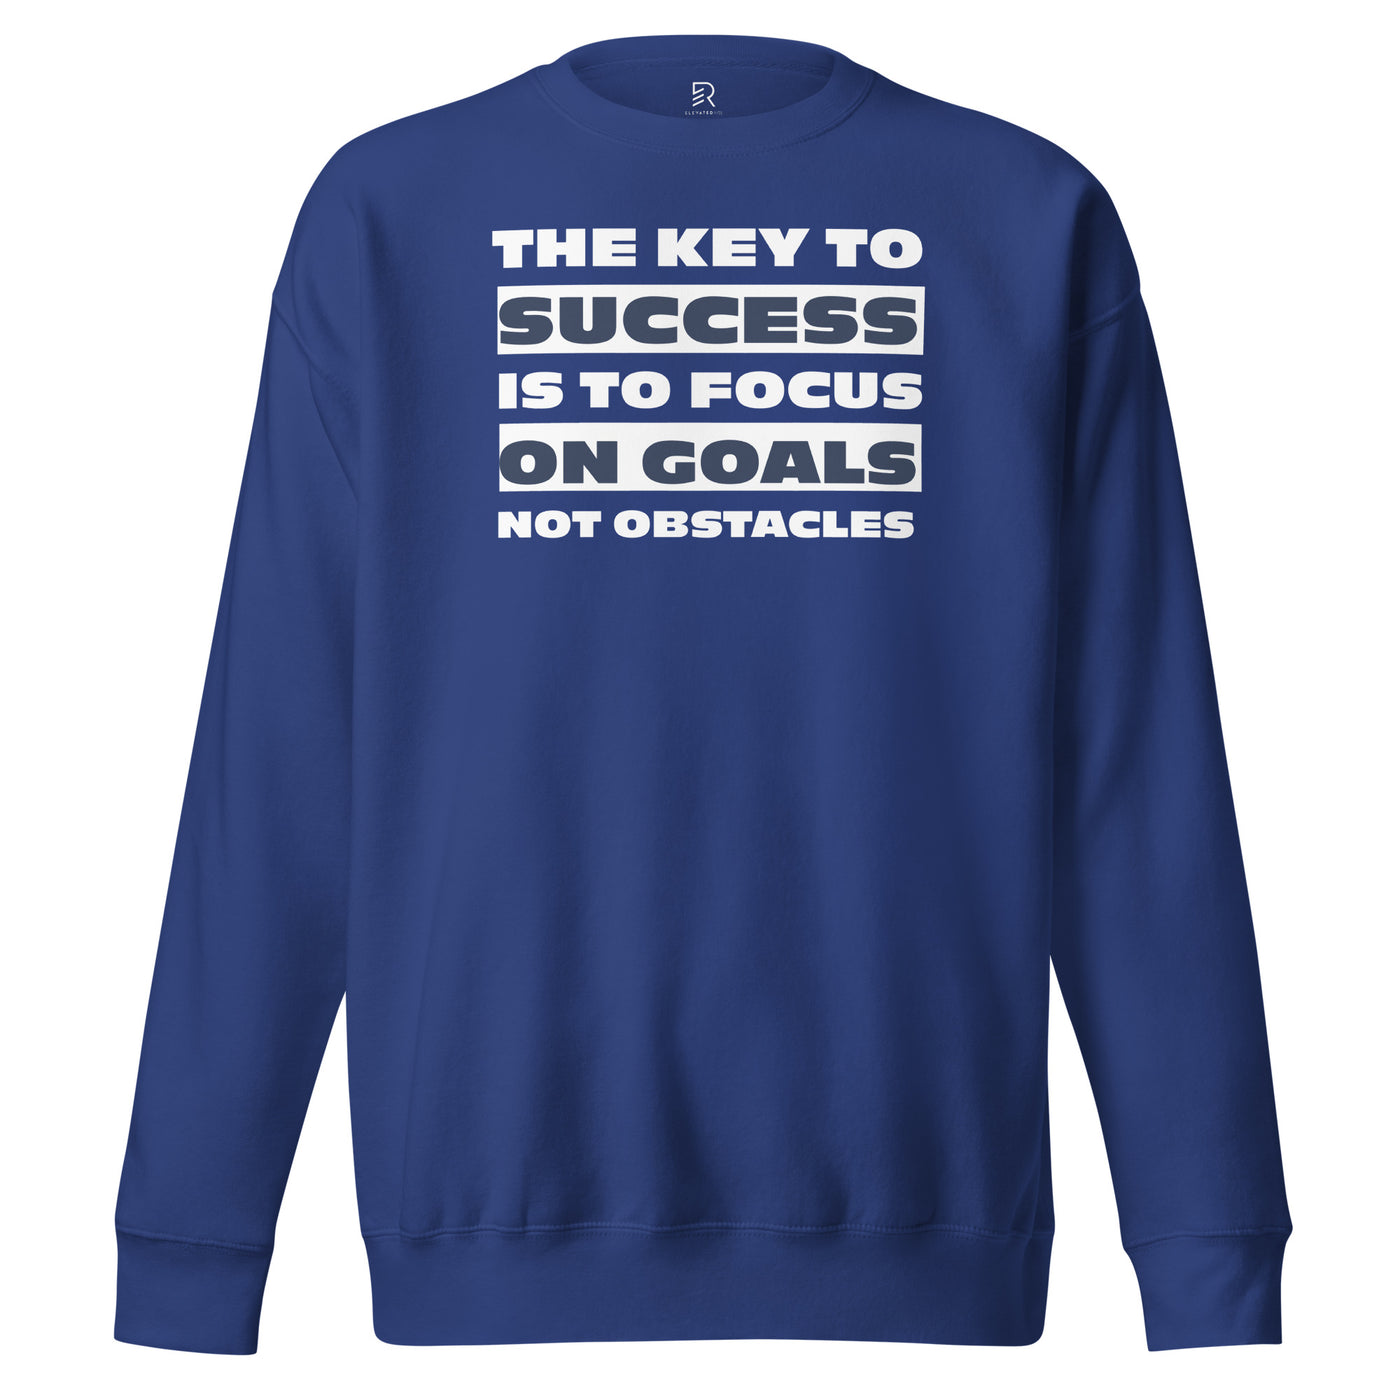 Men's Premium Royal Blue Sweatshirt - Focus on Goals